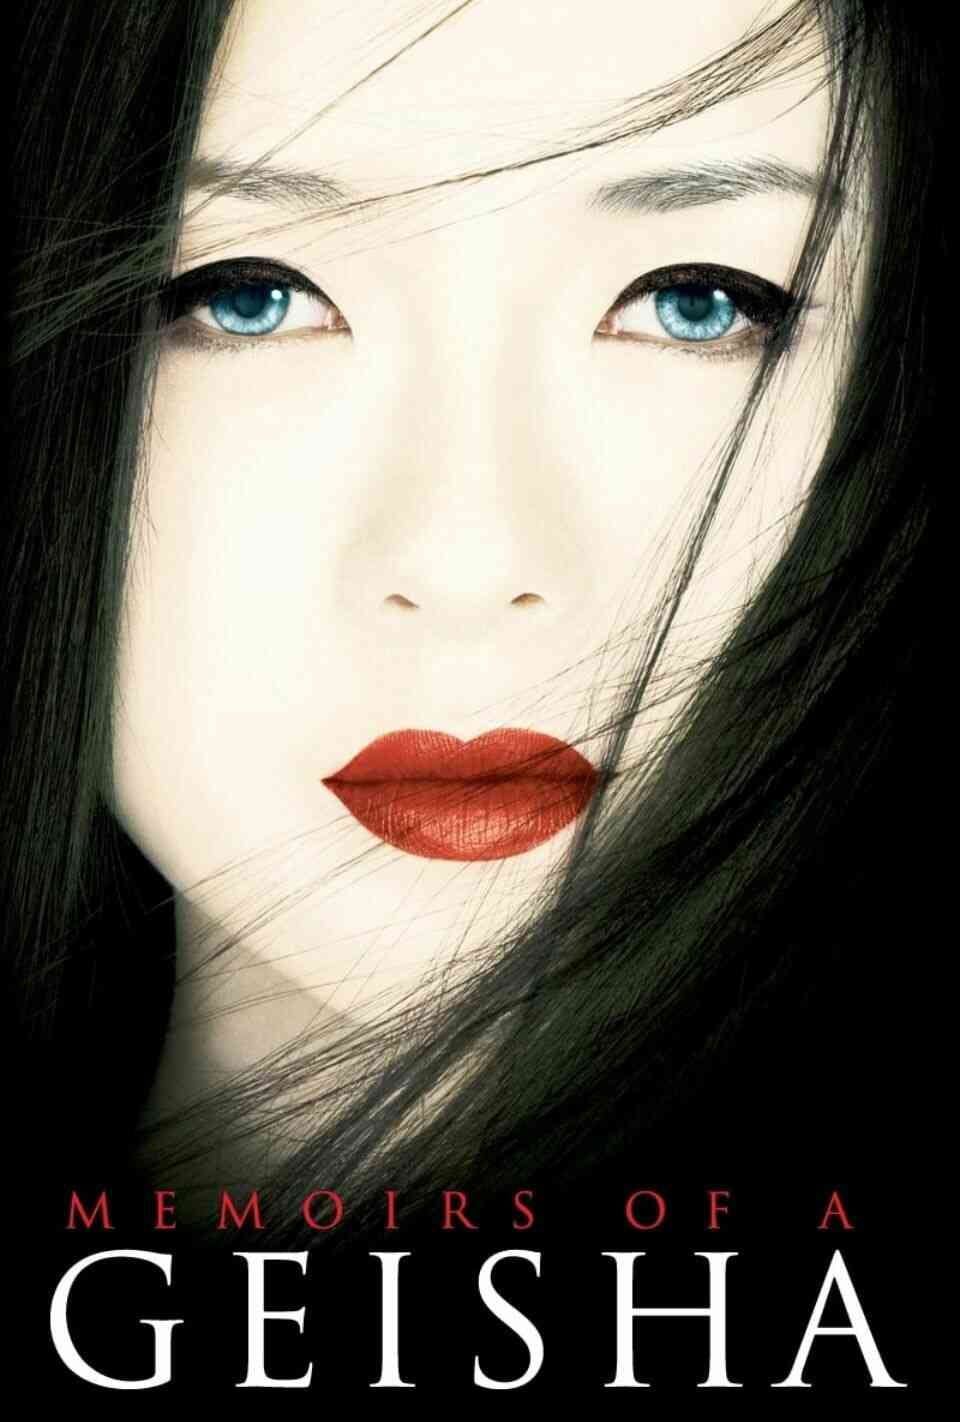 Read Memoirs of a Geisha screenplay.